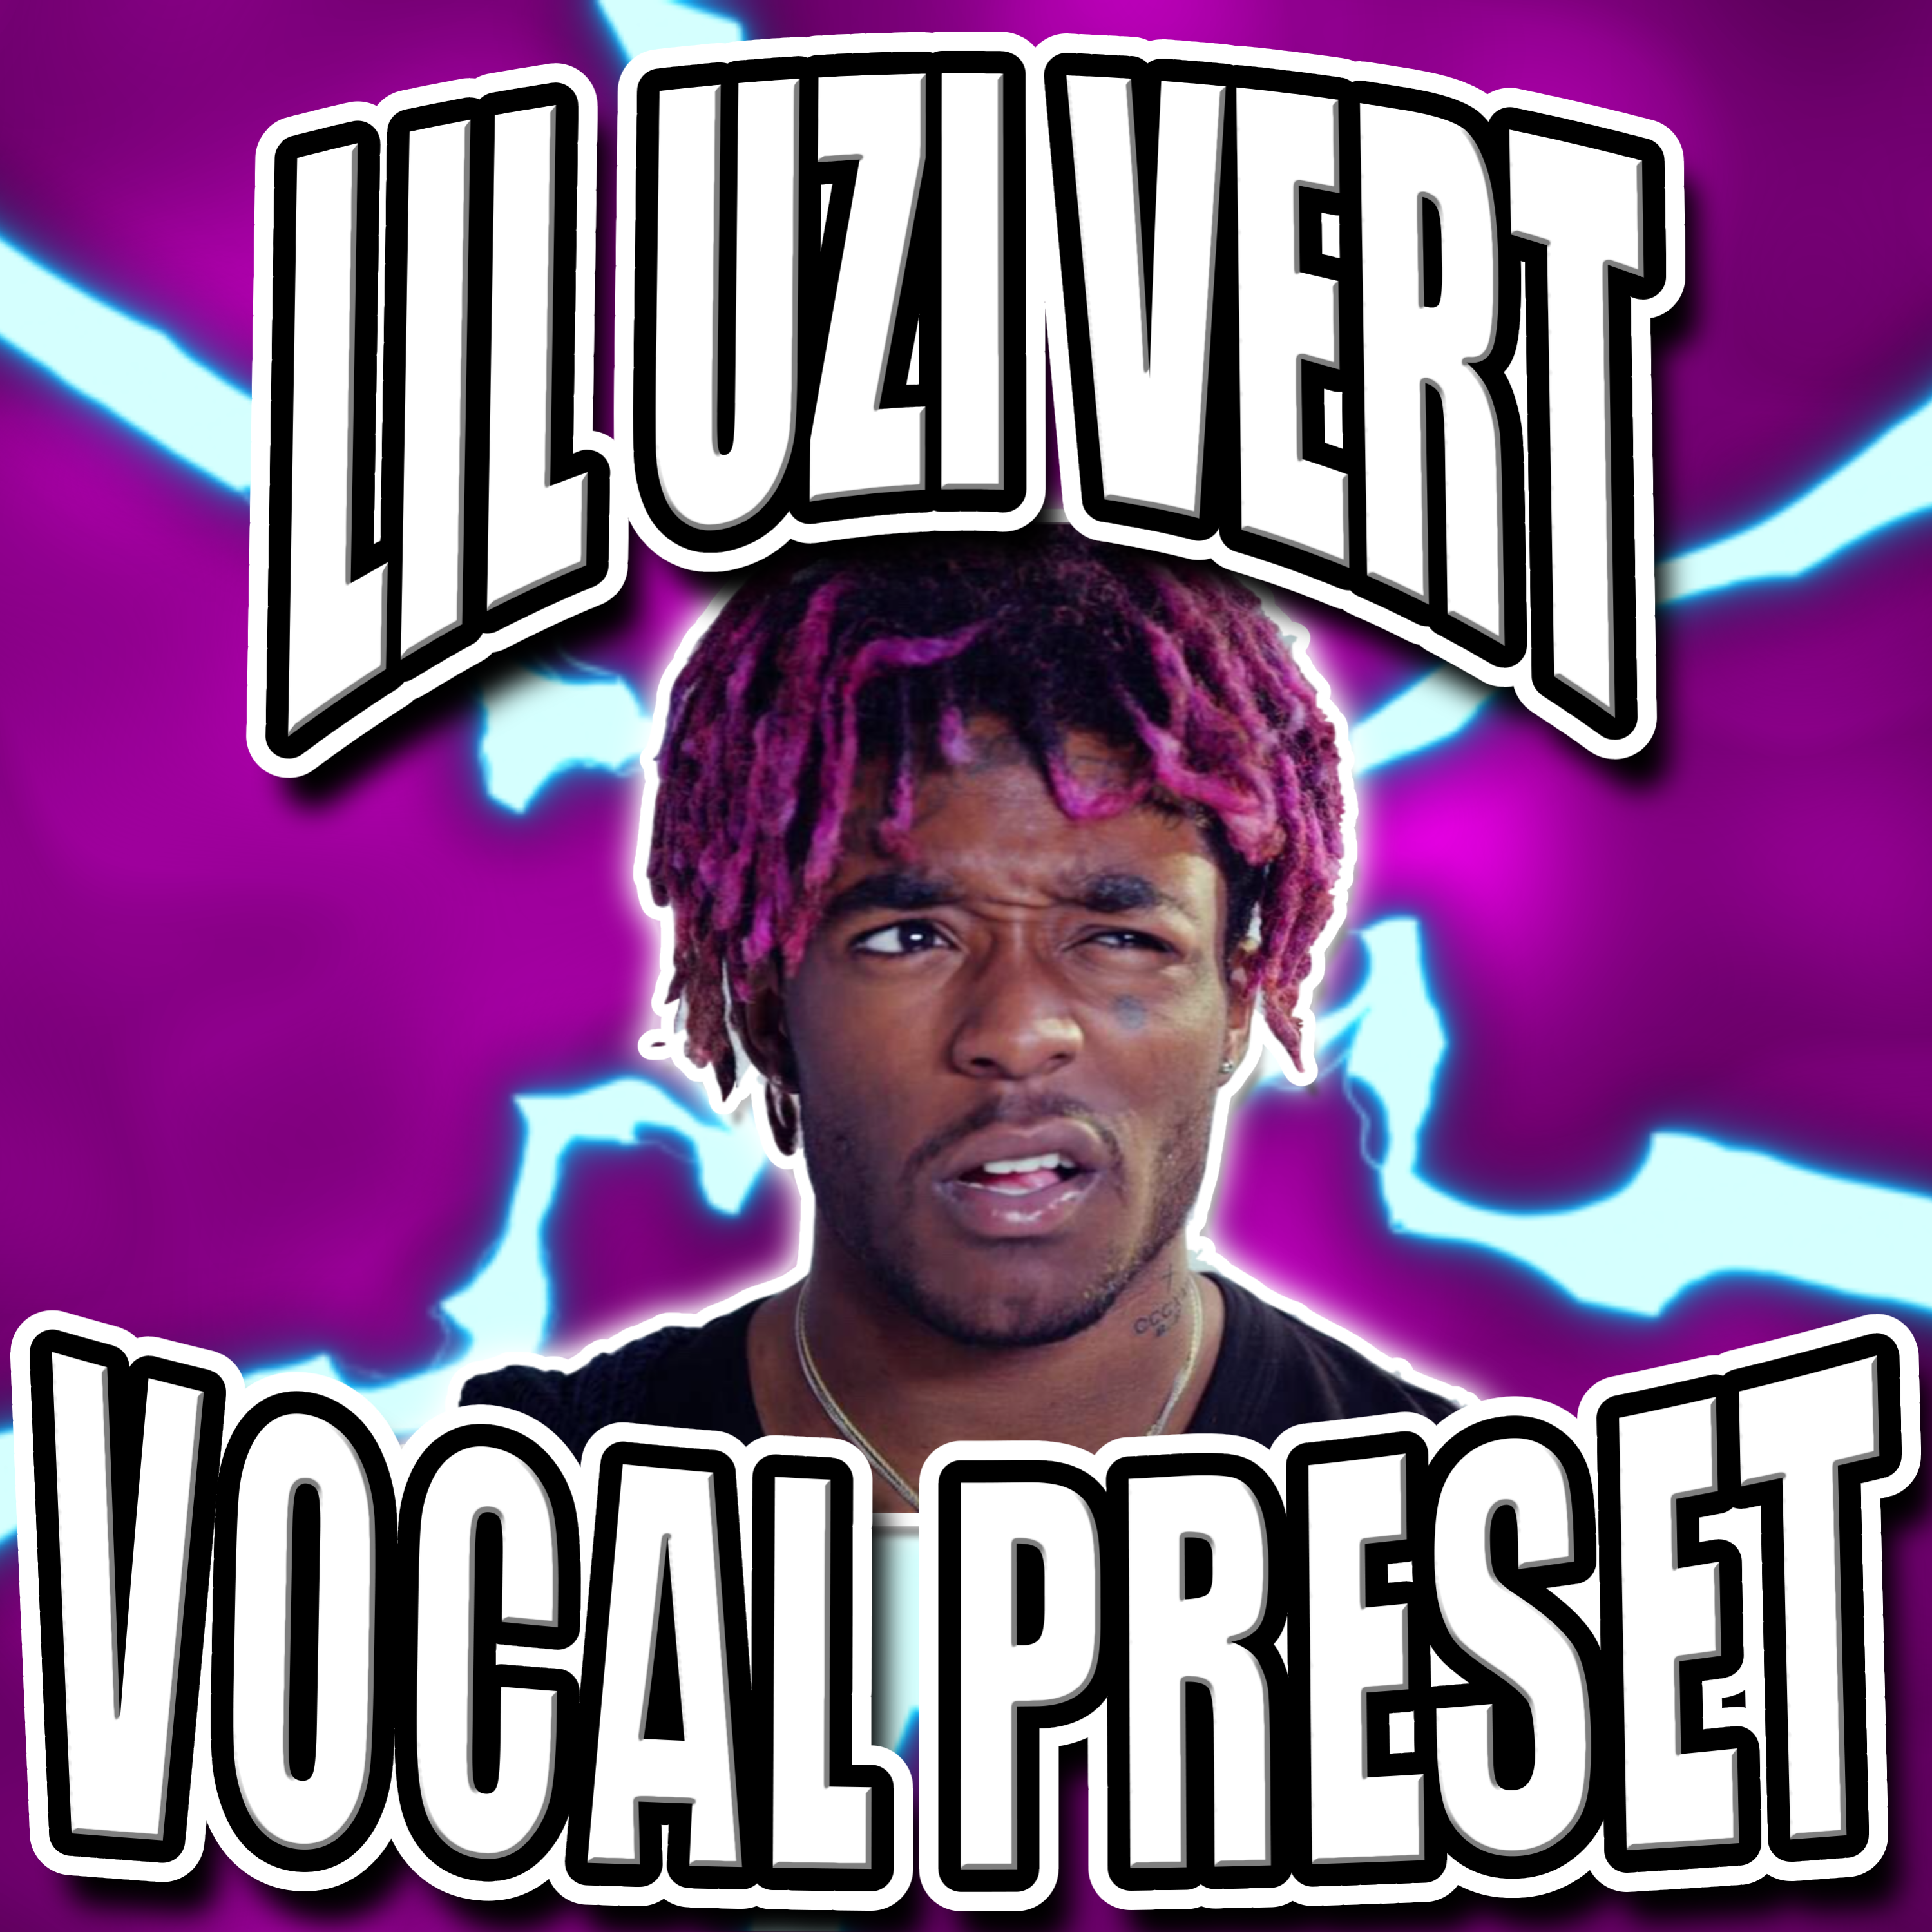 The Lil Uzi Vert Vocal Preset